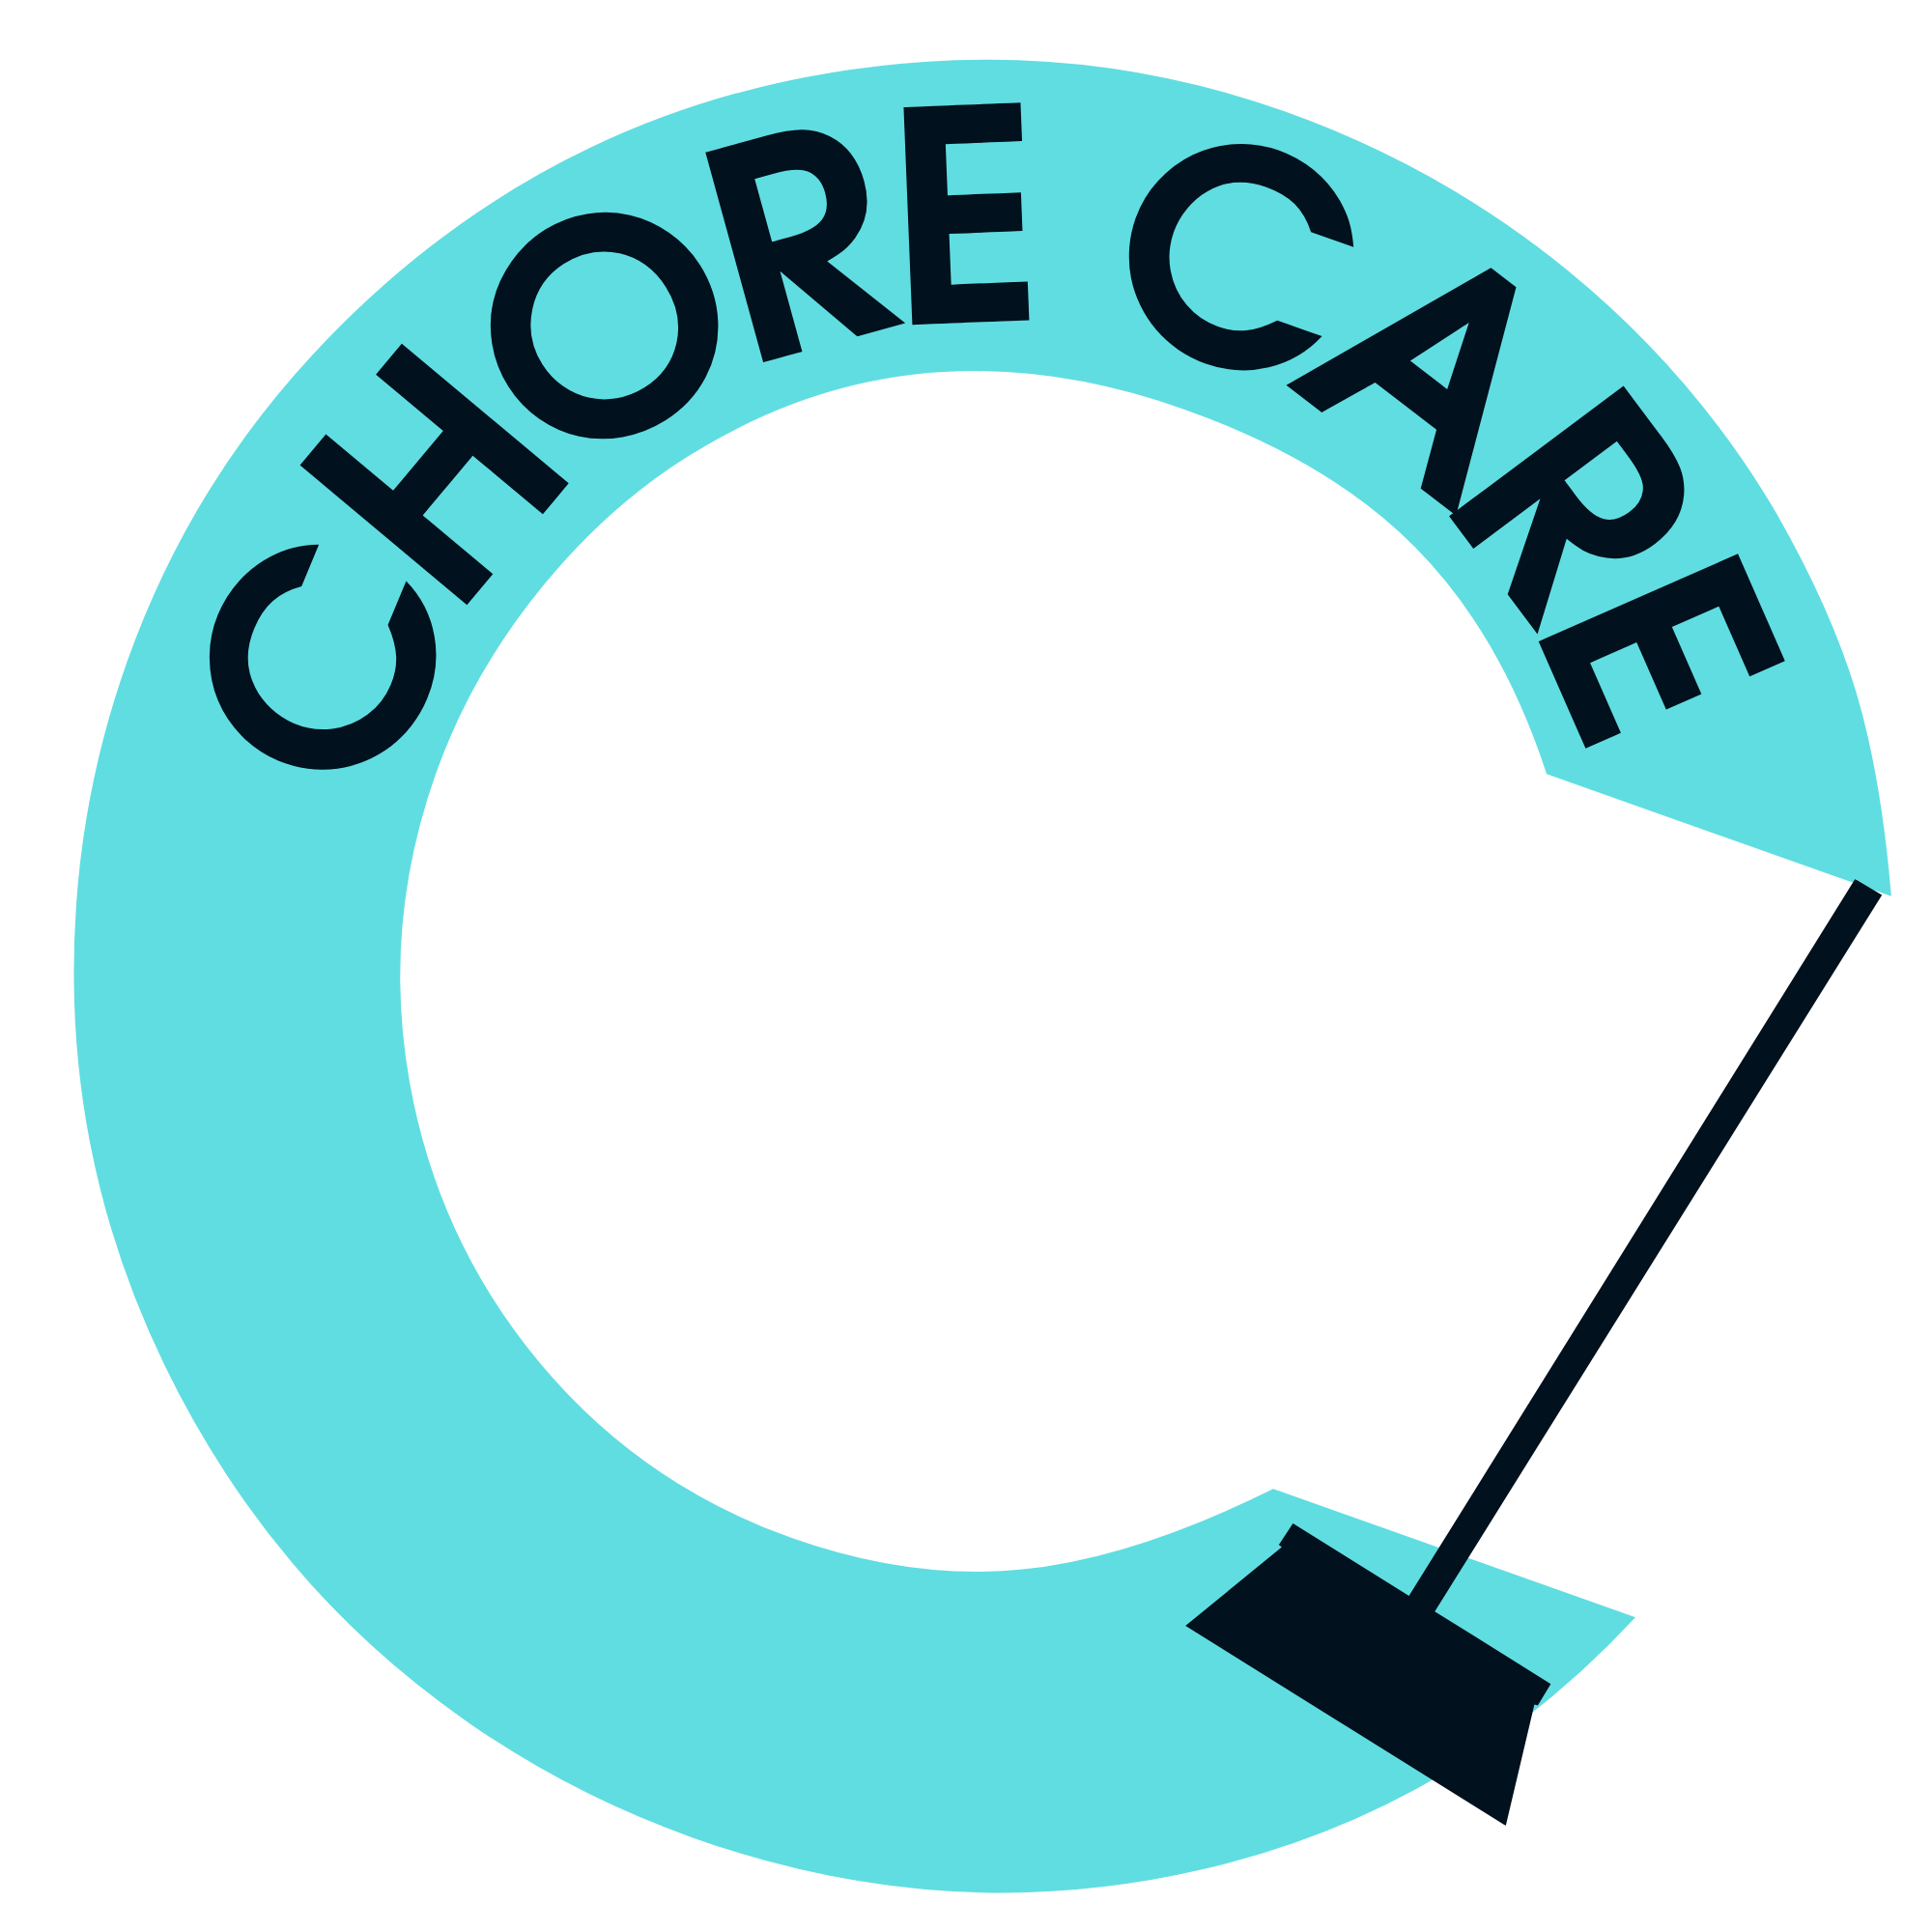 ChoreCare Continues to Enjoy Rave Reviews for The ChoreCare Pro App